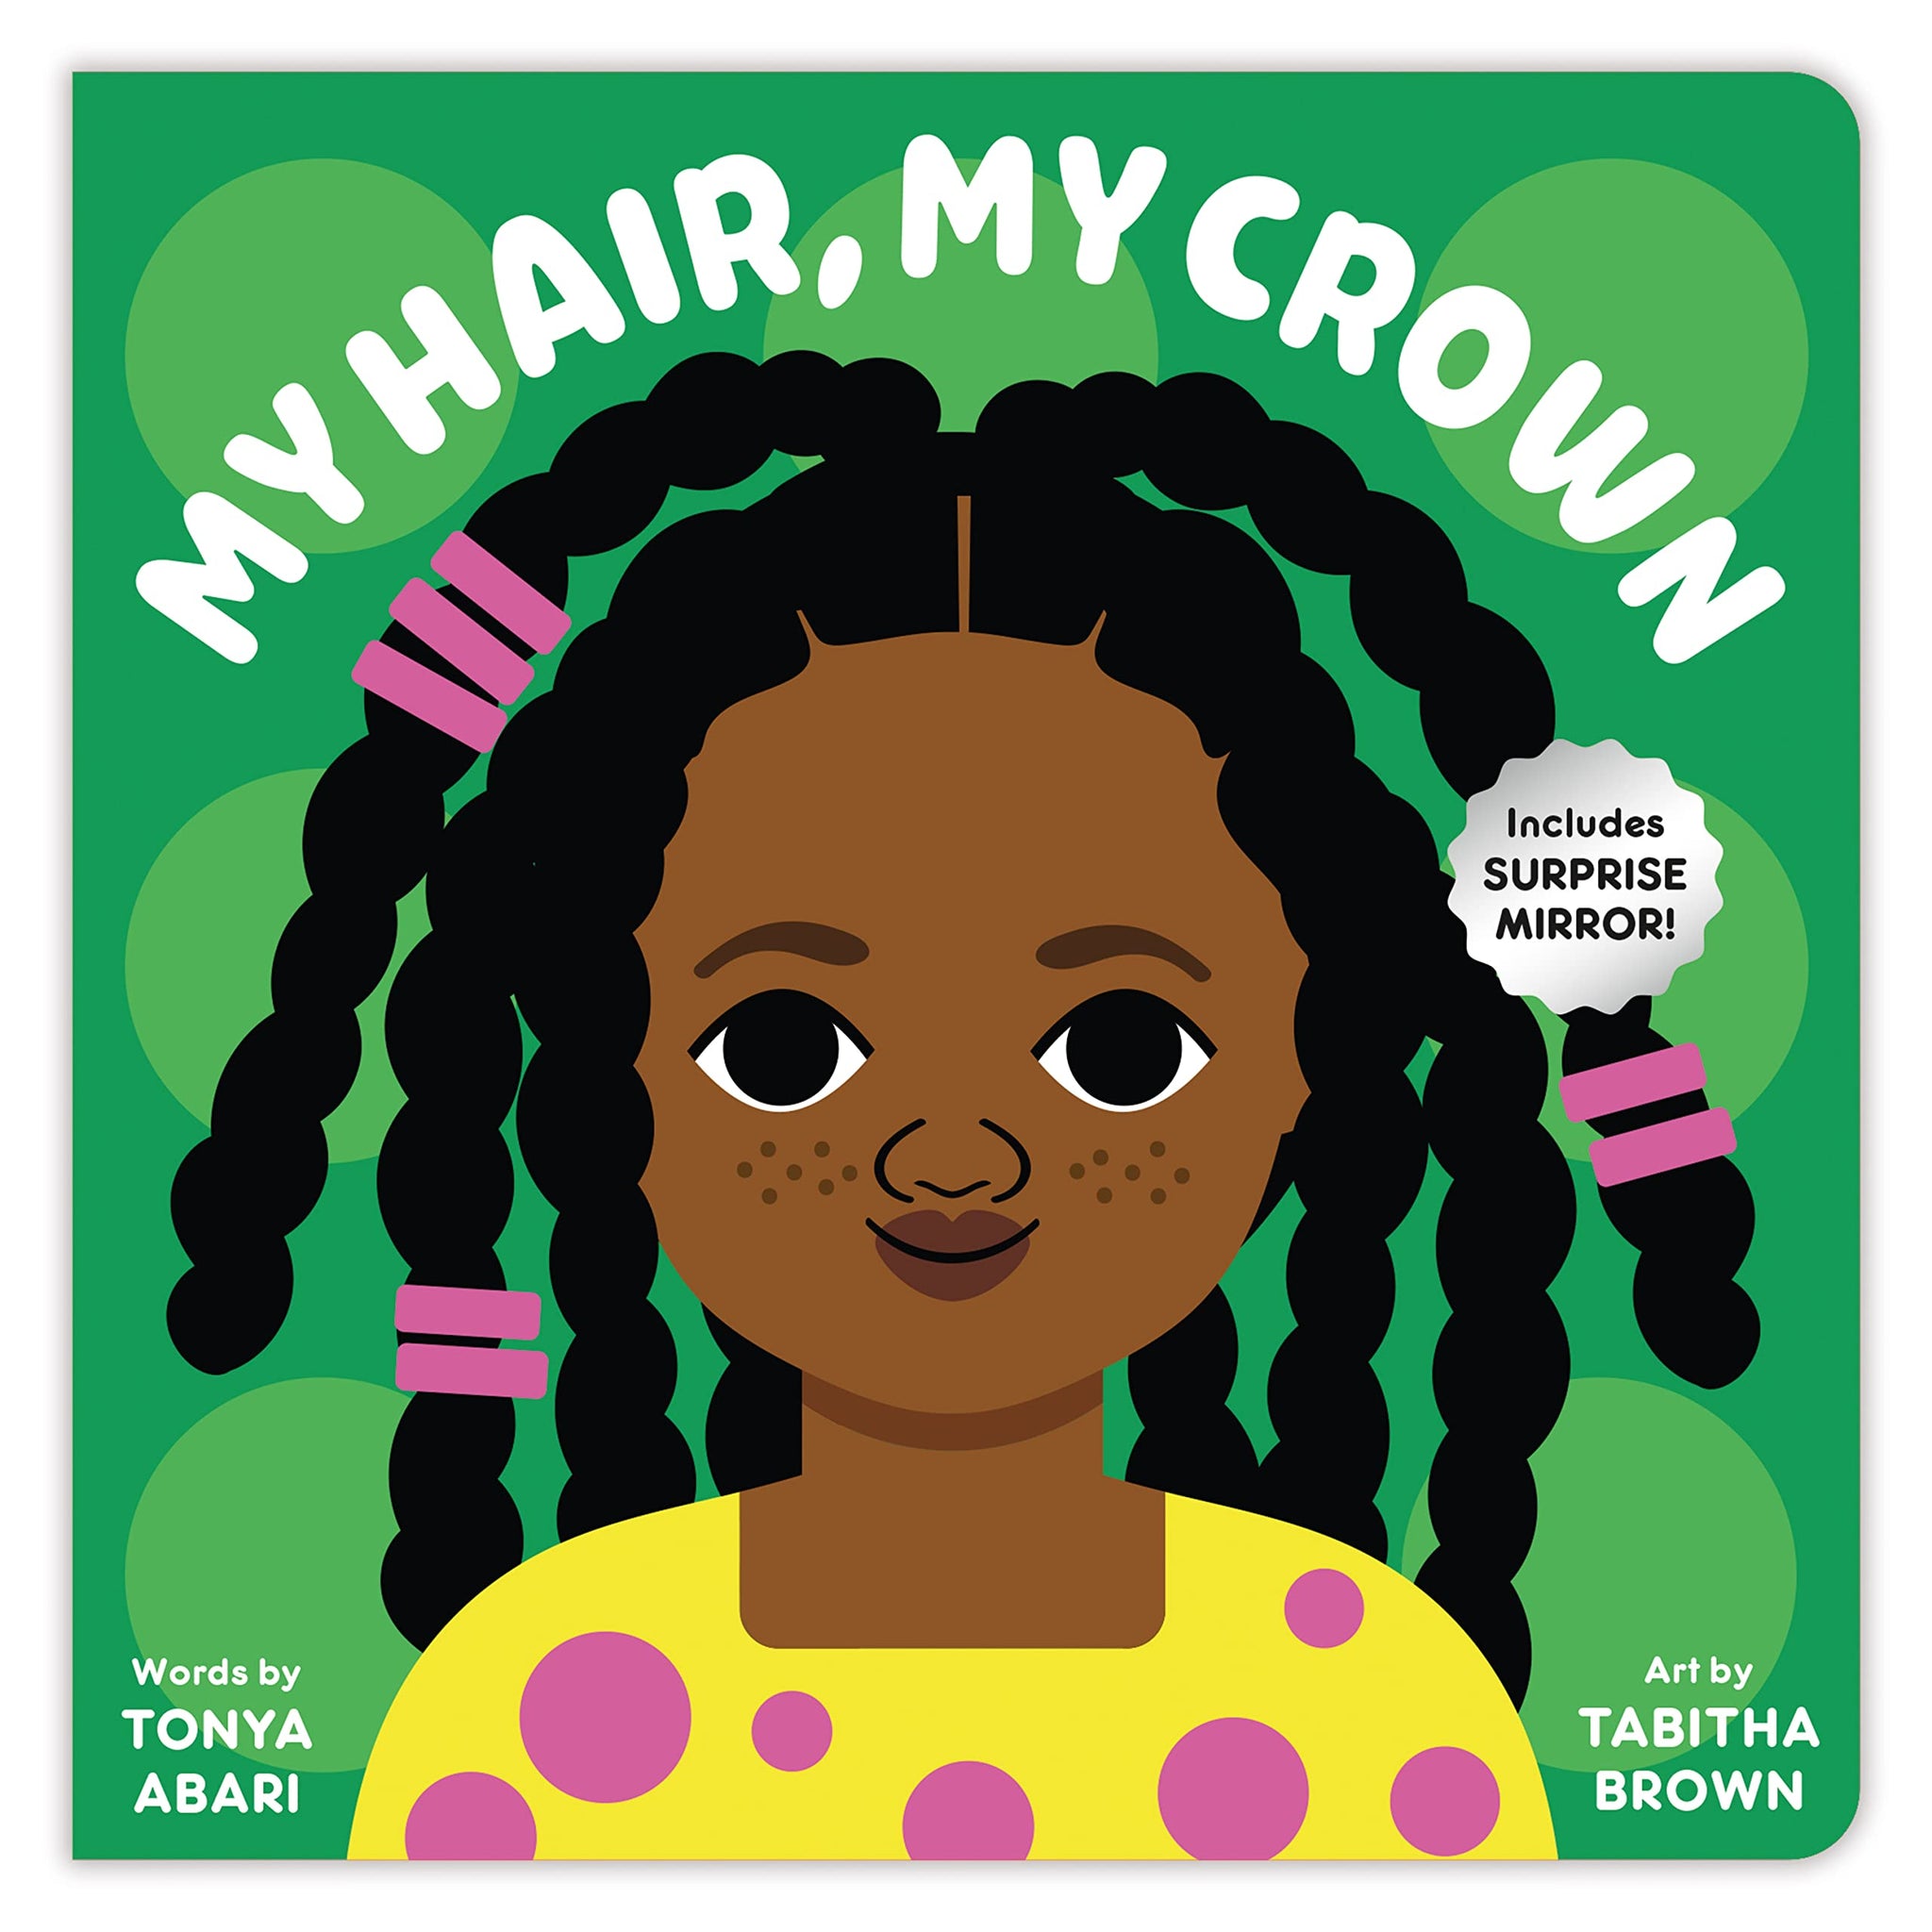 My Hair, My Crown Board Book